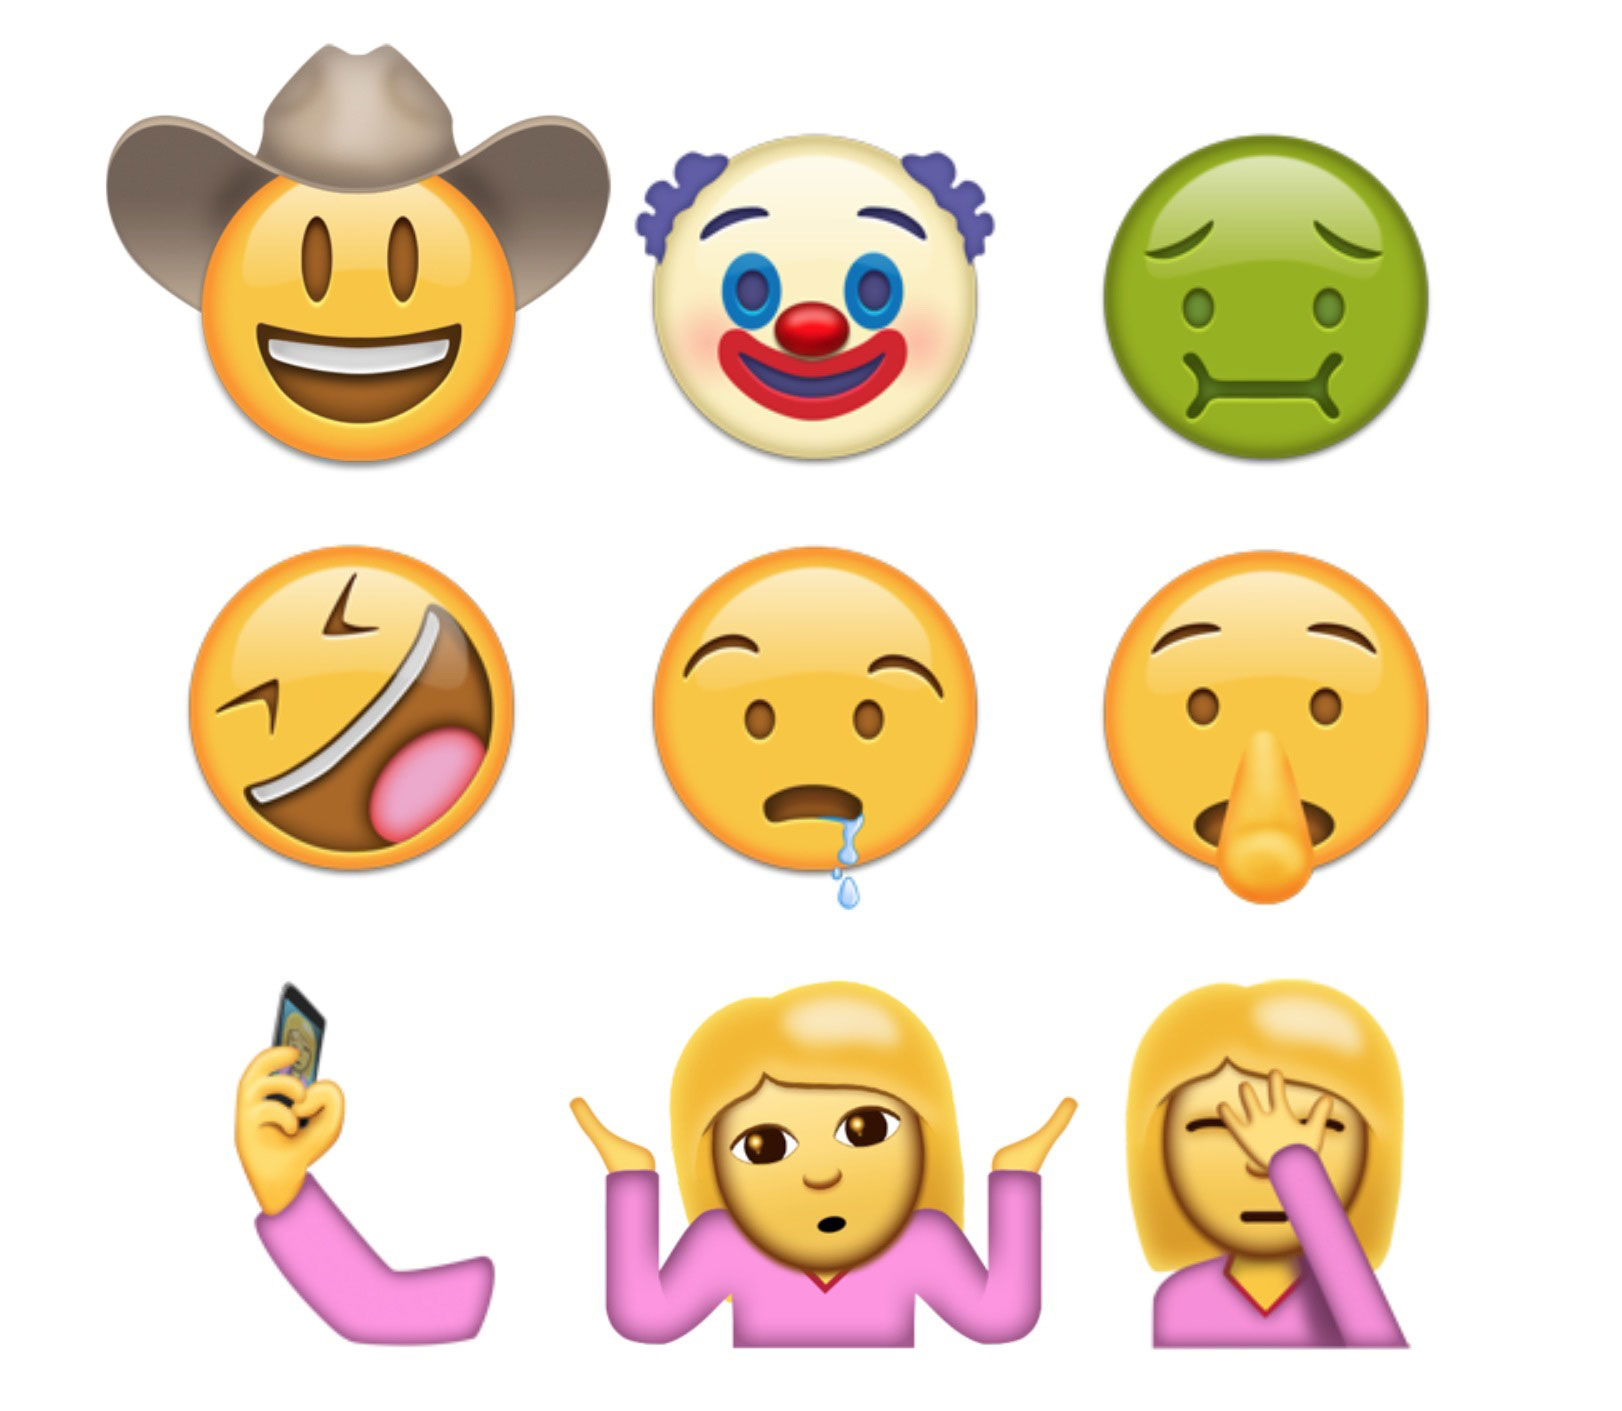 Snart släpps 38 nya emojis - så ser de ut - Metro Mode